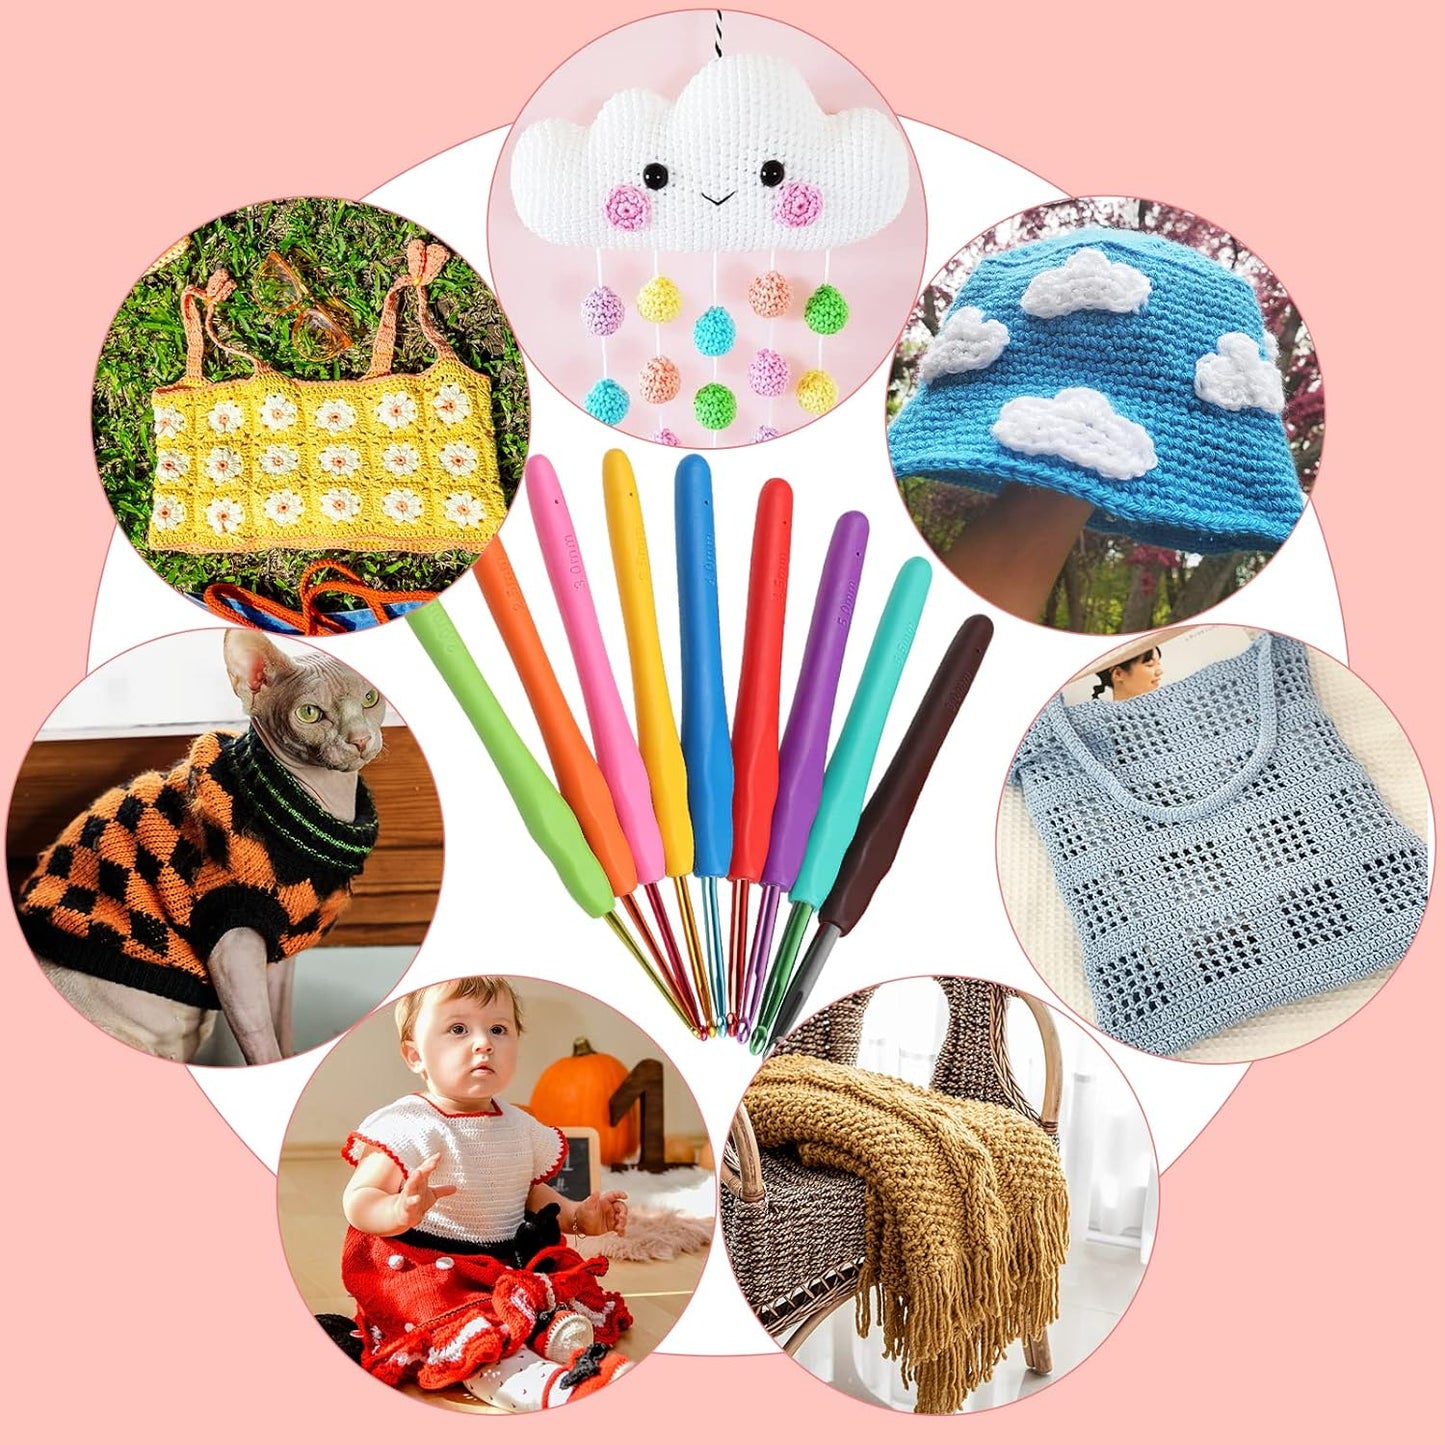 Crochet Kit for Beginners Adults, Crochet Kits Include Yarn, 59Pcs Crochet Starter Kit for Beginners Kids,Ergonomic Crochet Hooks 2.0-6.0 Mm, Lace Steel Needles 0.6-1.9 Mm